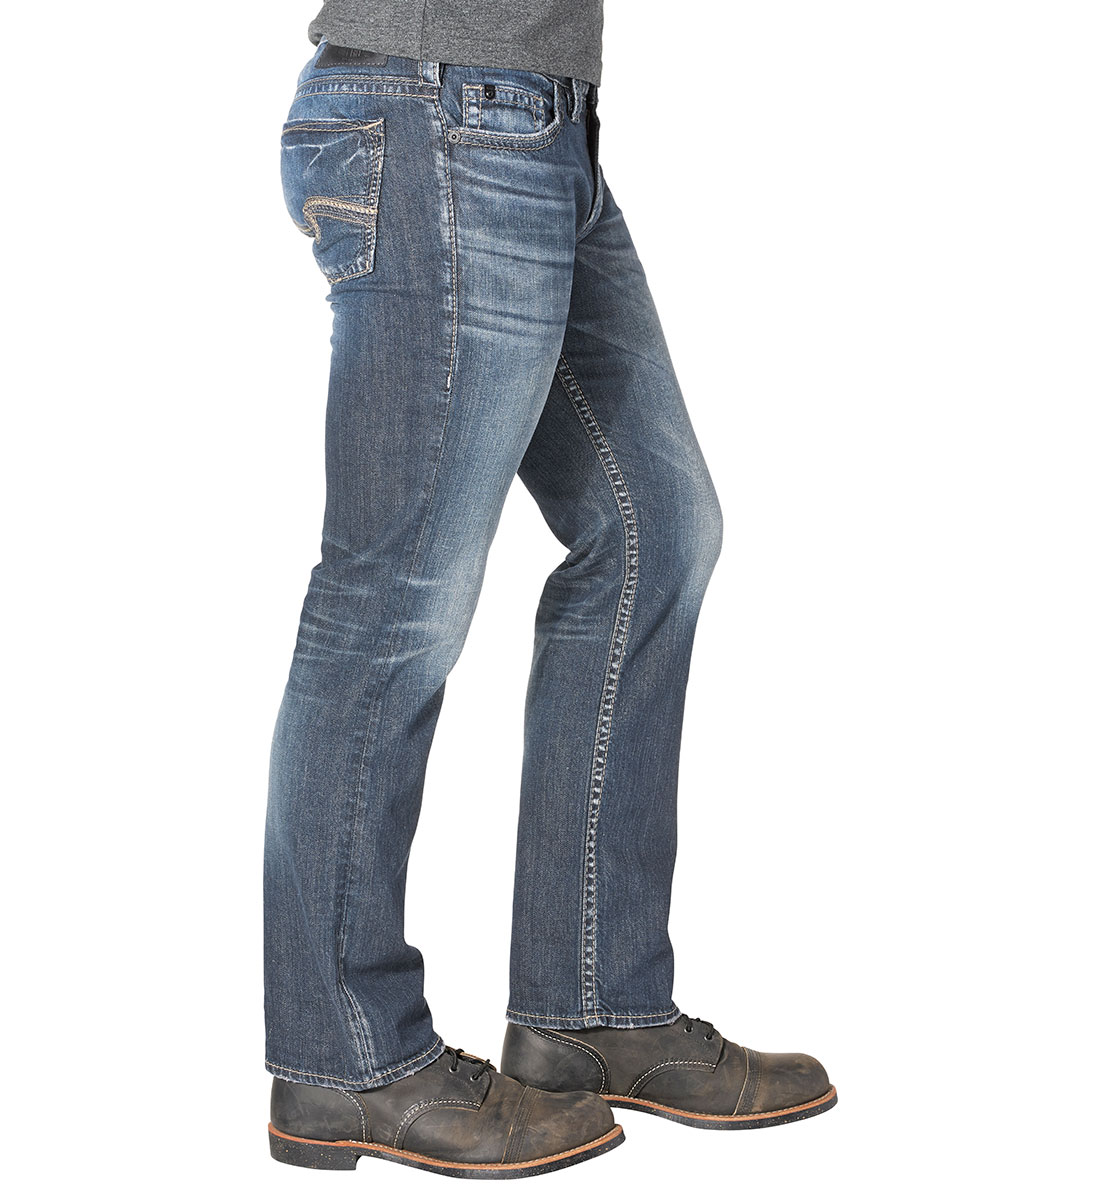 cinch silver label dark wash jeans